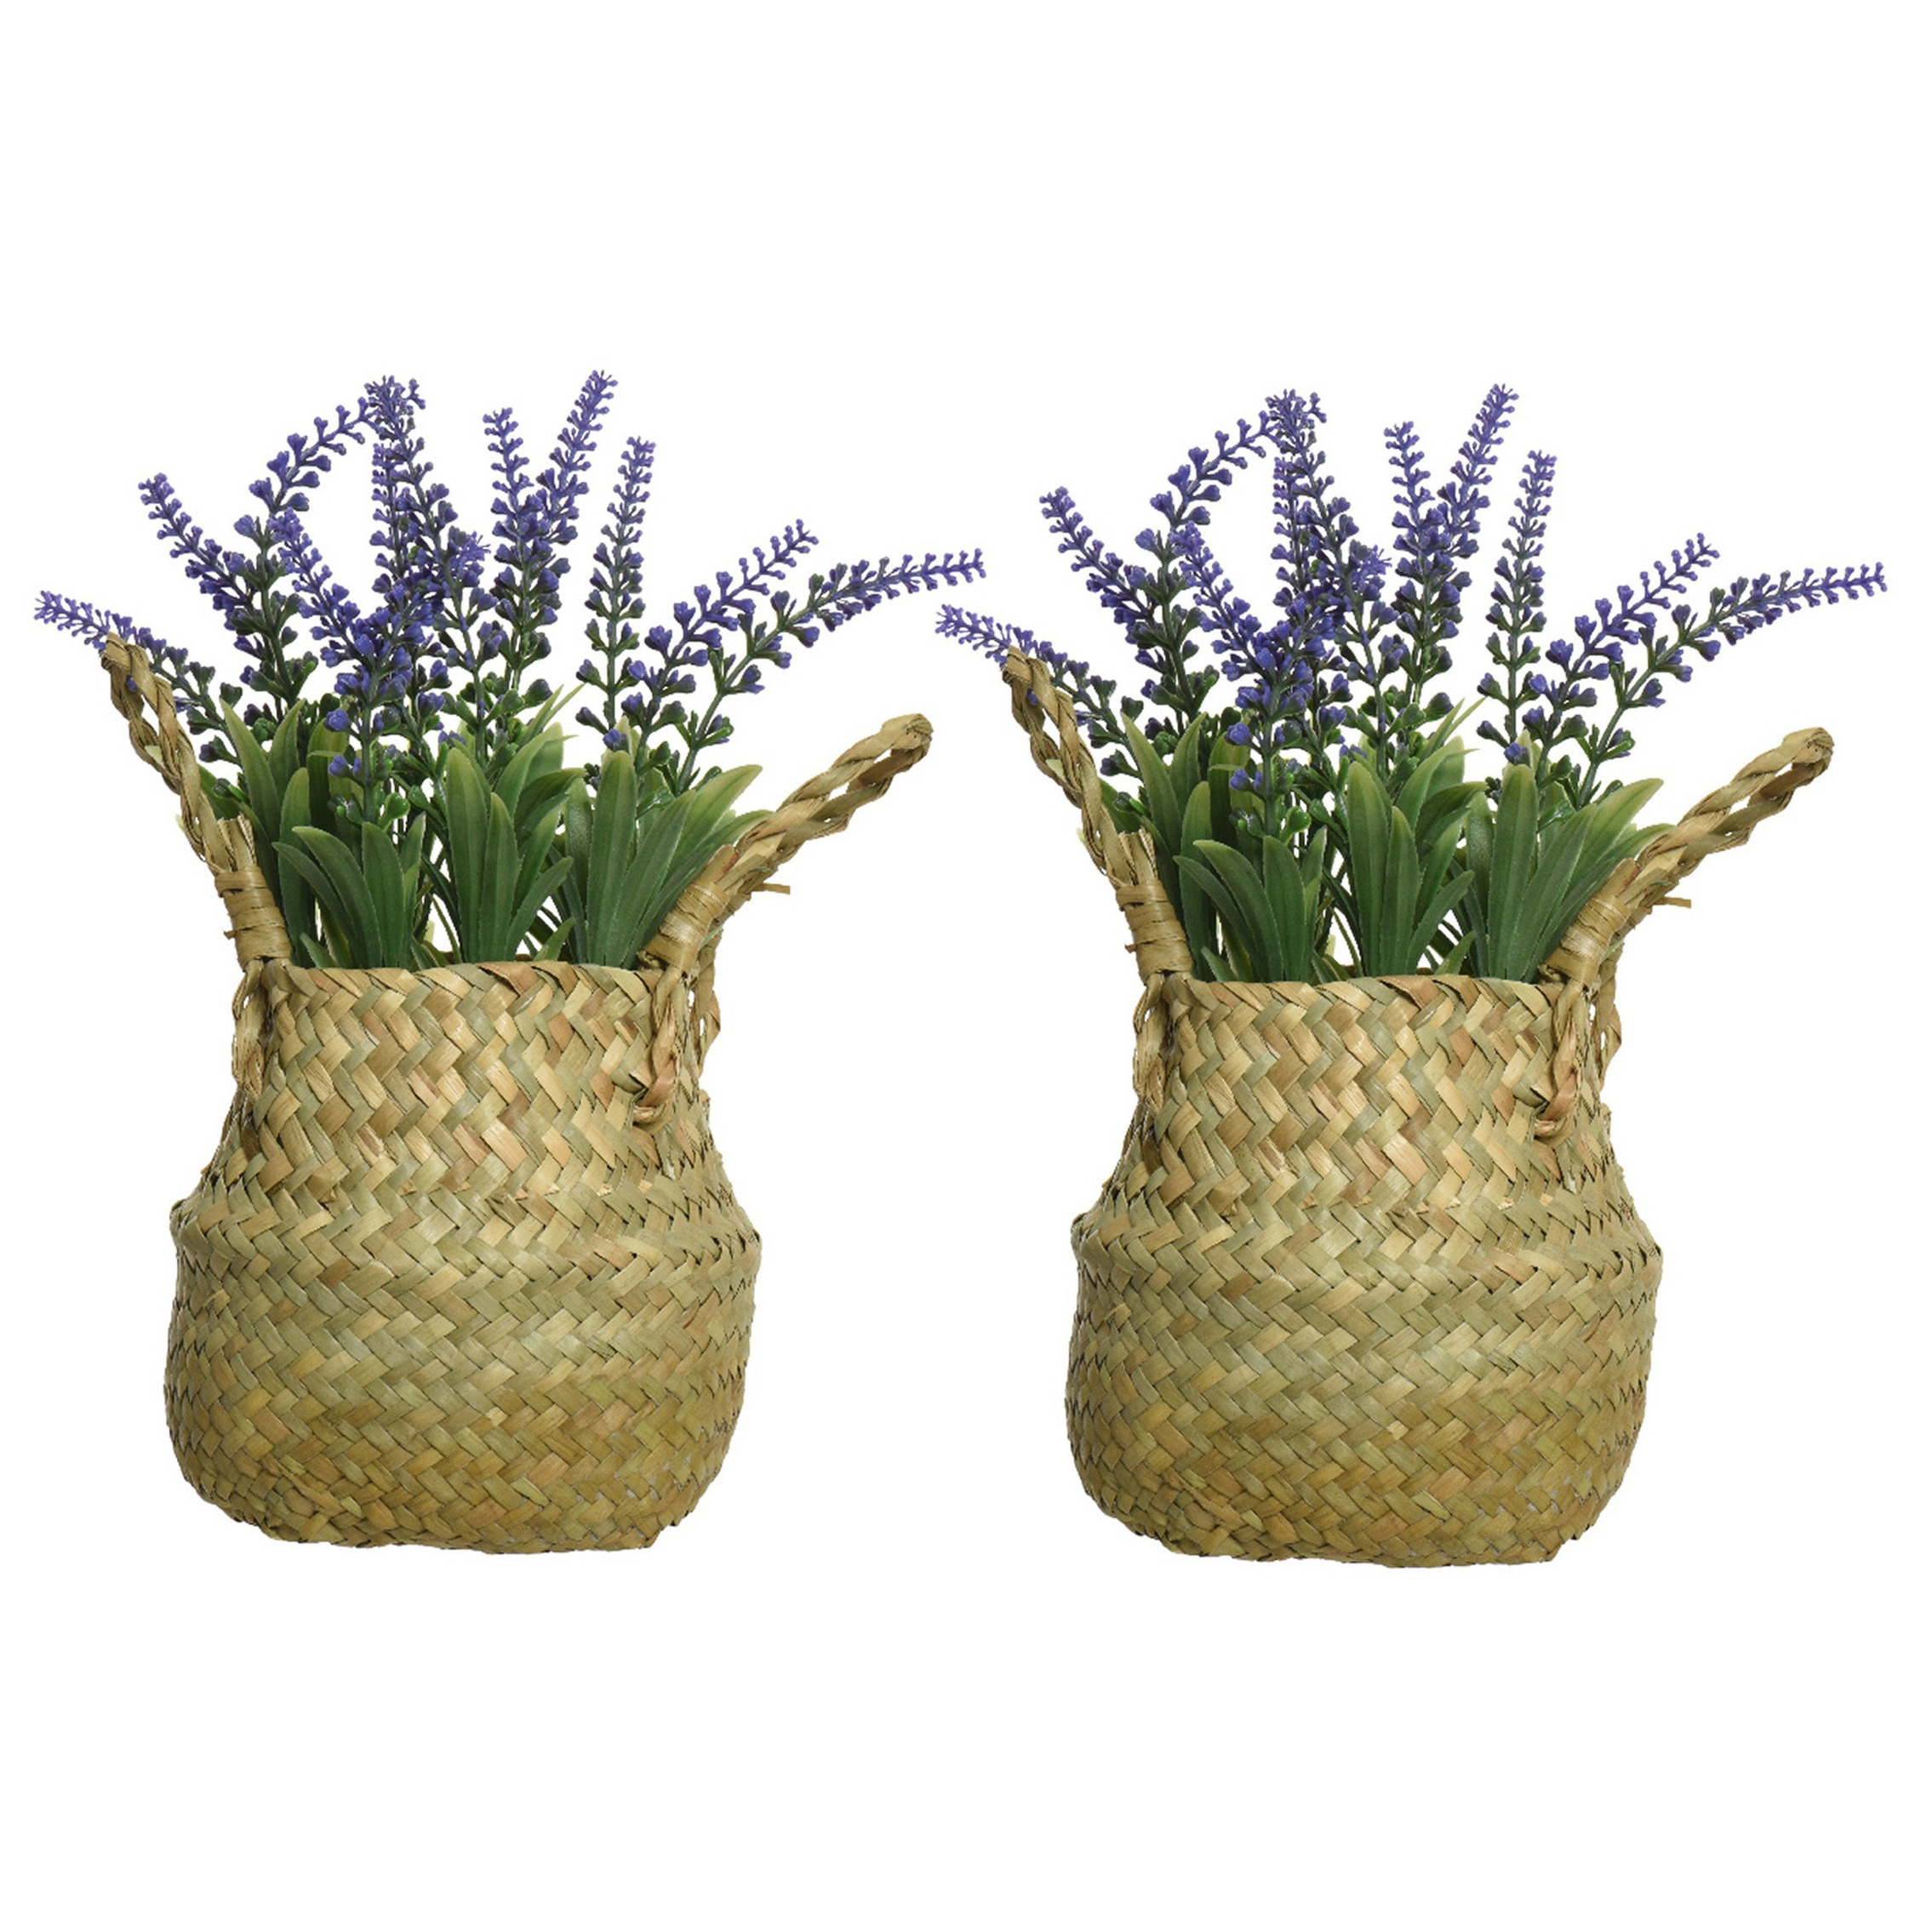 Everlands Lavendel kunstplant in rieten mand 2x lila paars D16 x H27 cm